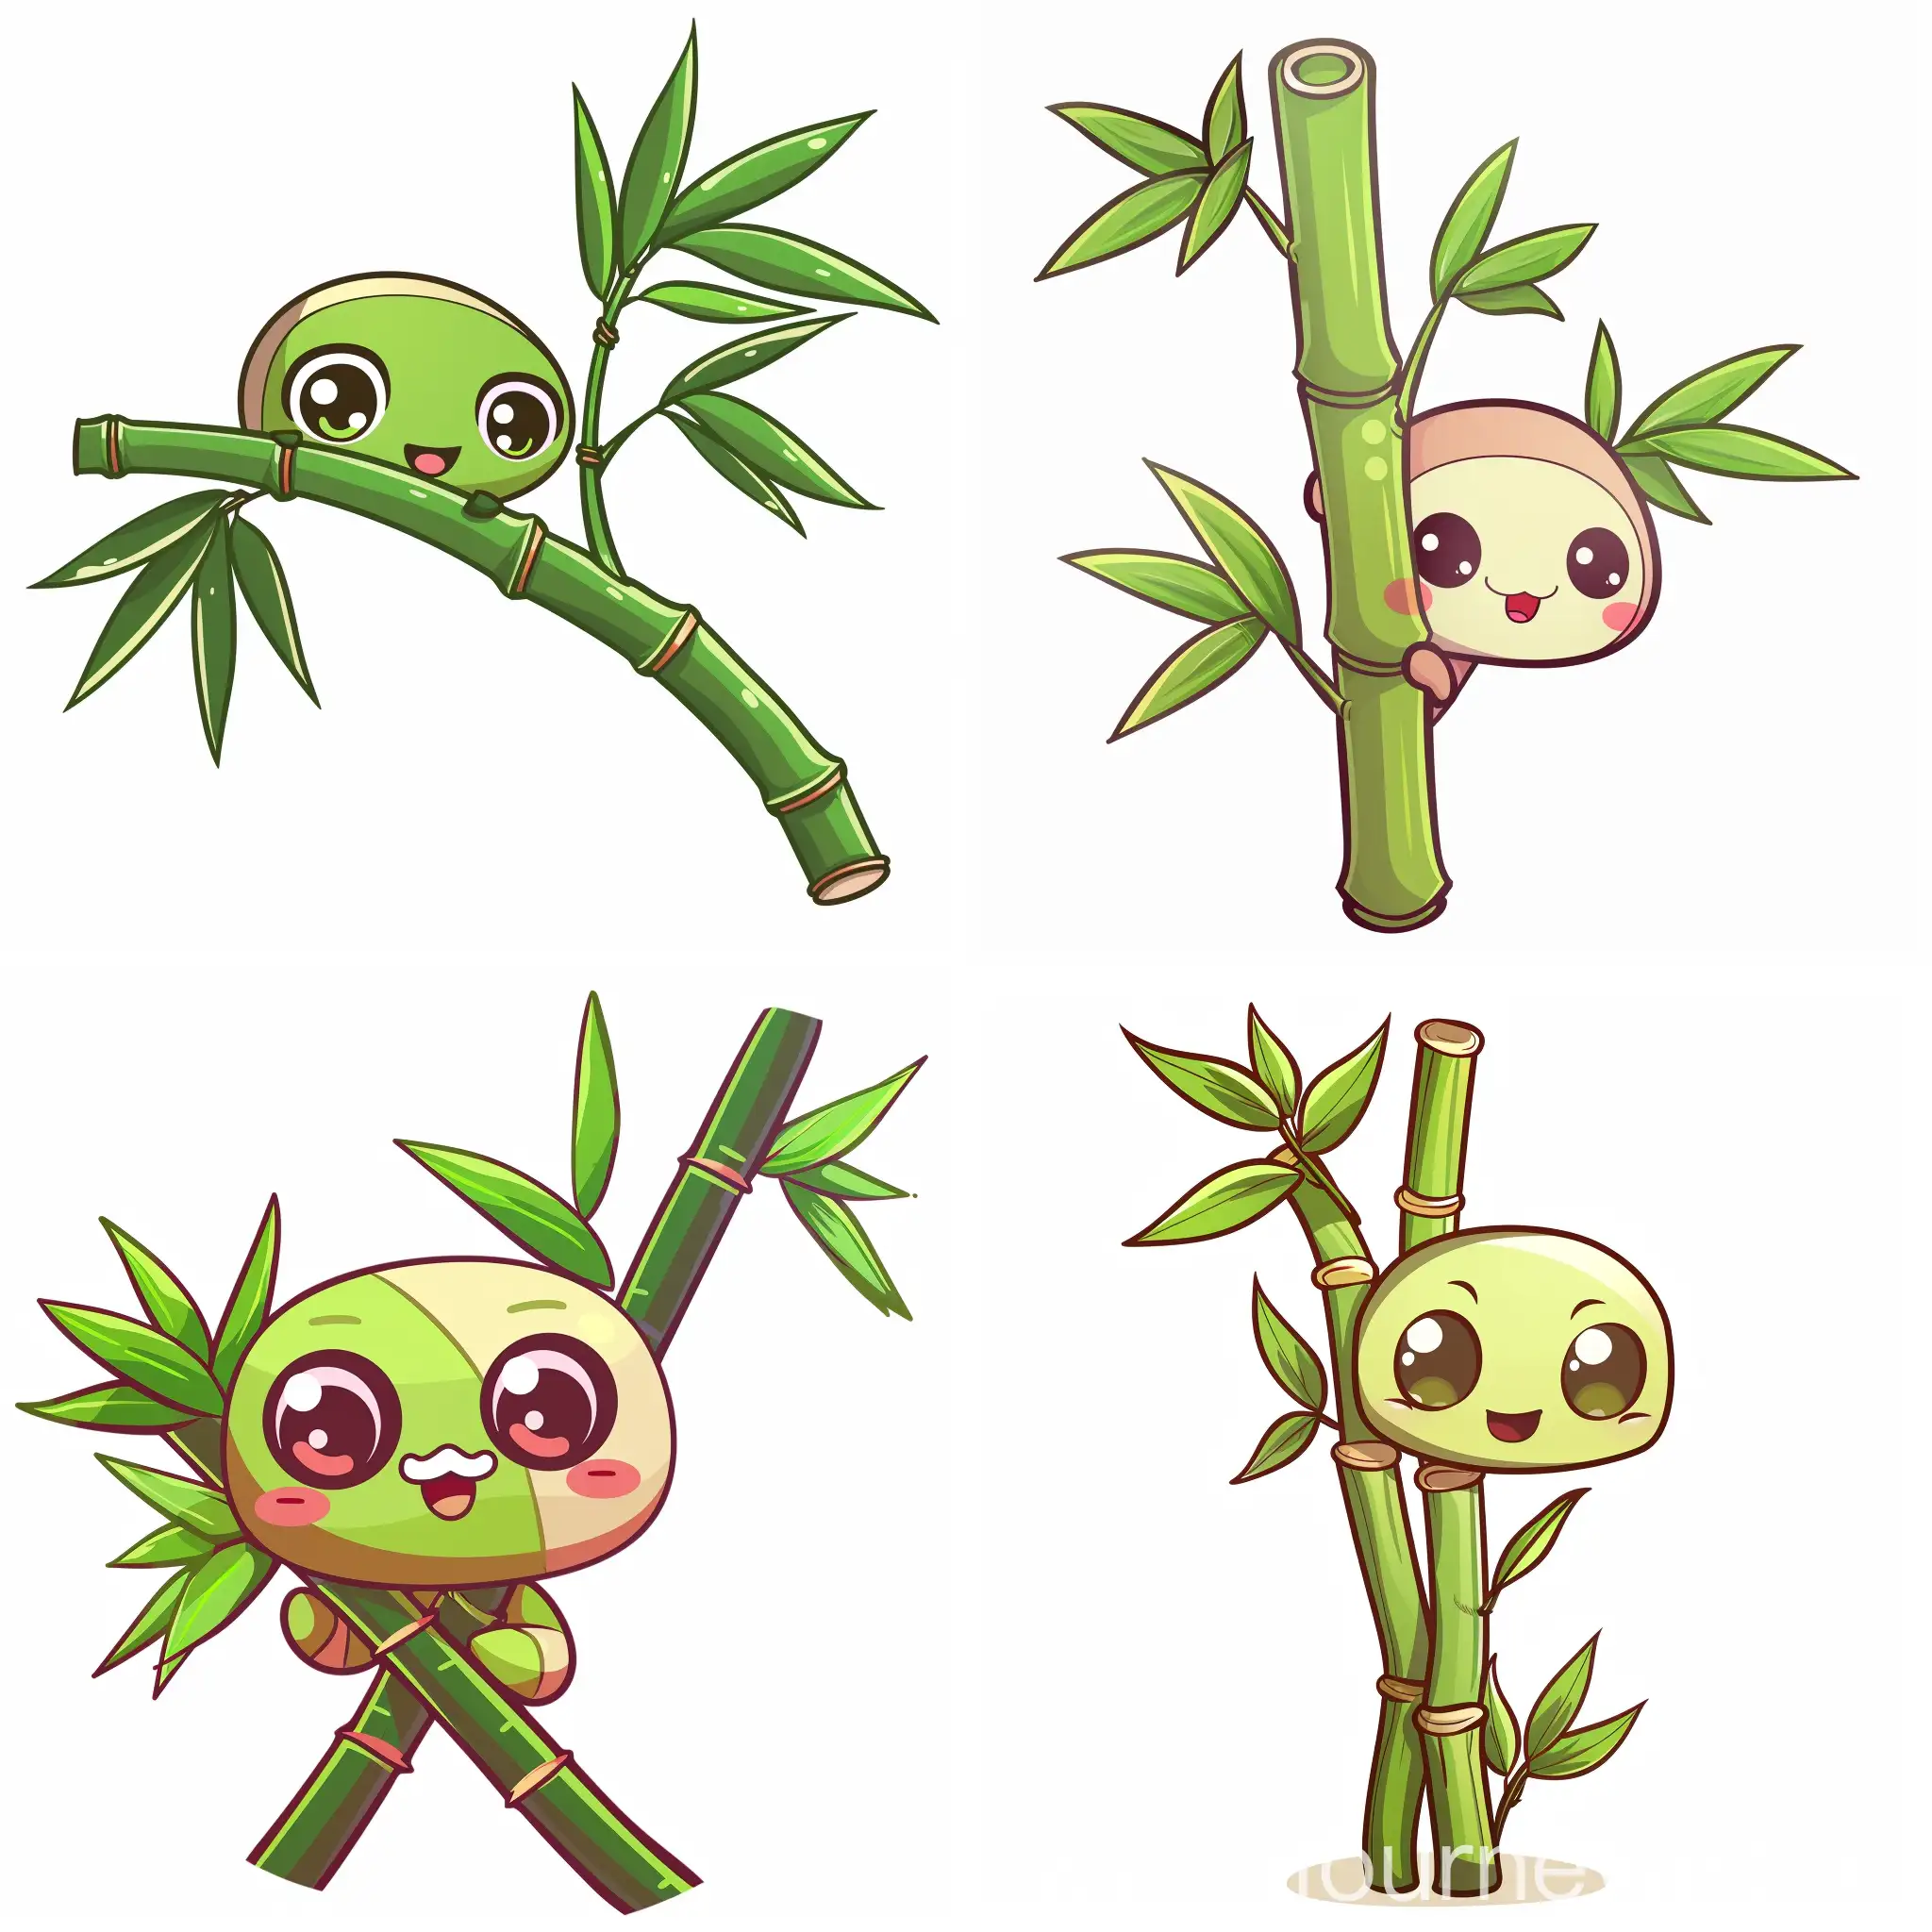 Adorable-Cartoon-Bamboo-Tree-Branch-Character-Chibi-Style-Artwork